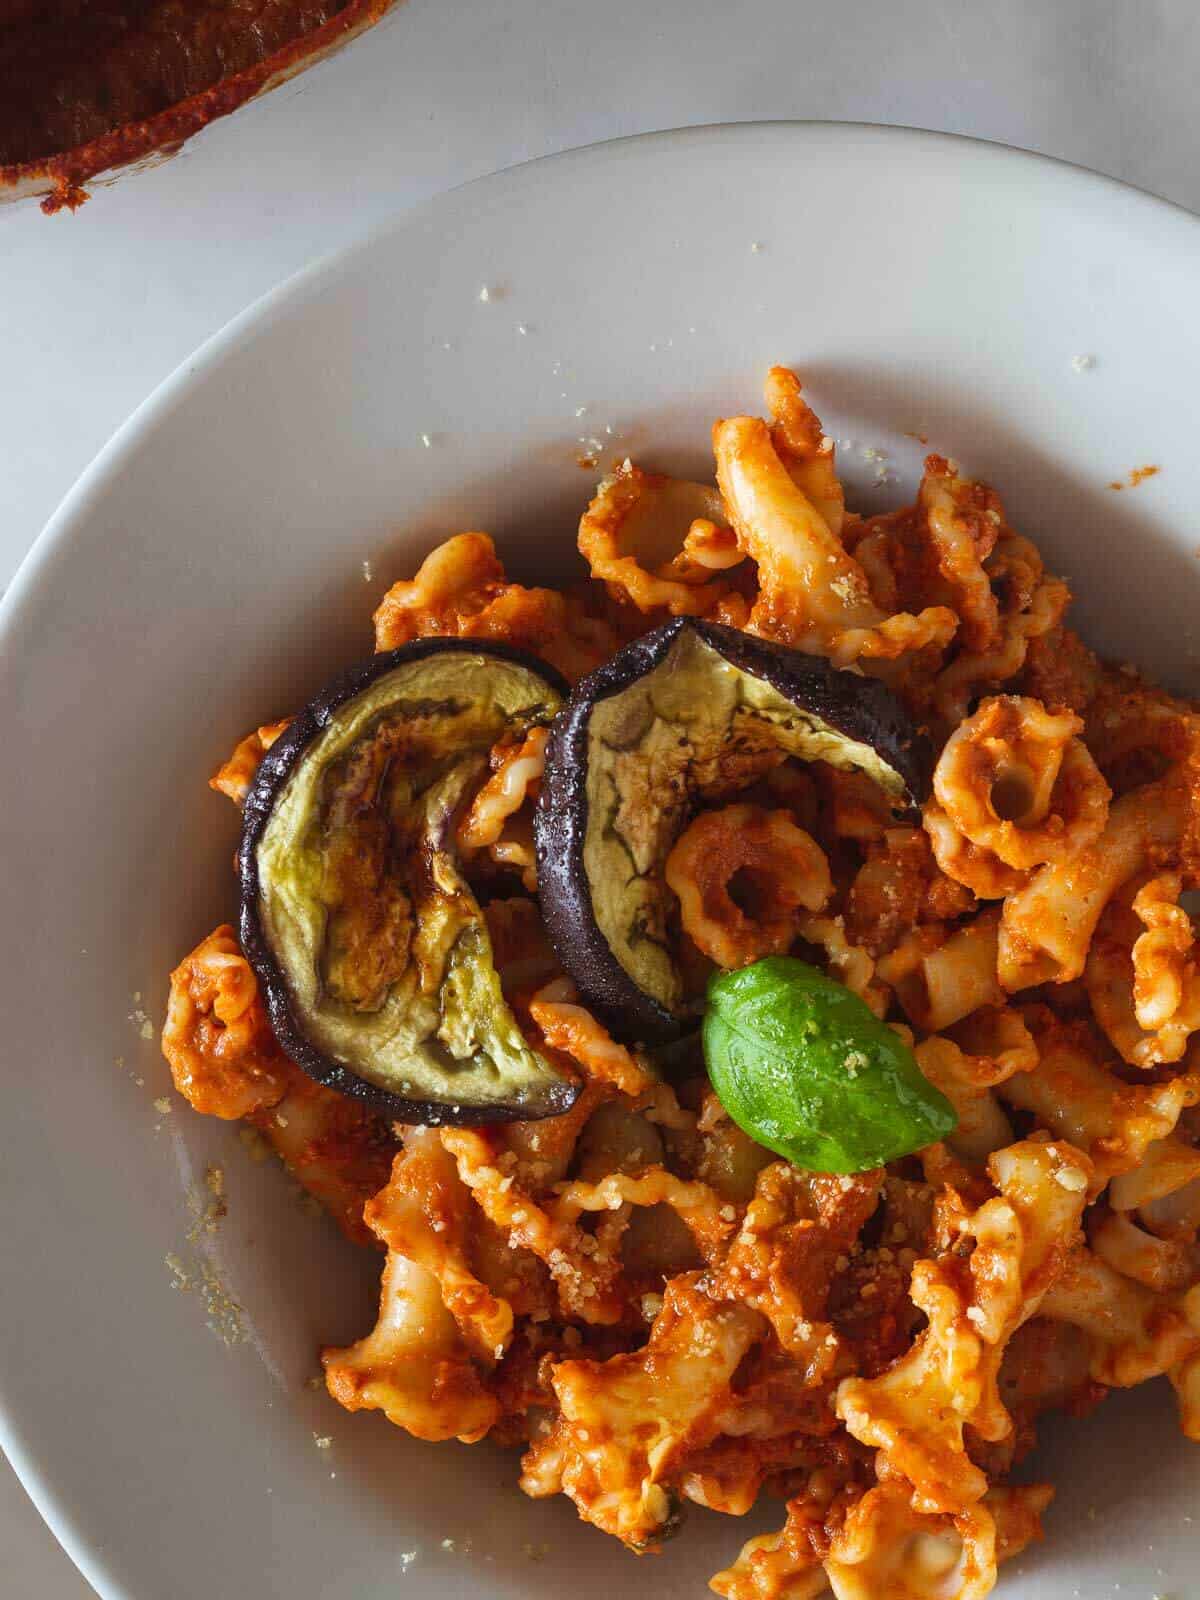 creamy eggplant pastta with tomato ricotta sauce folded into curly pasta.